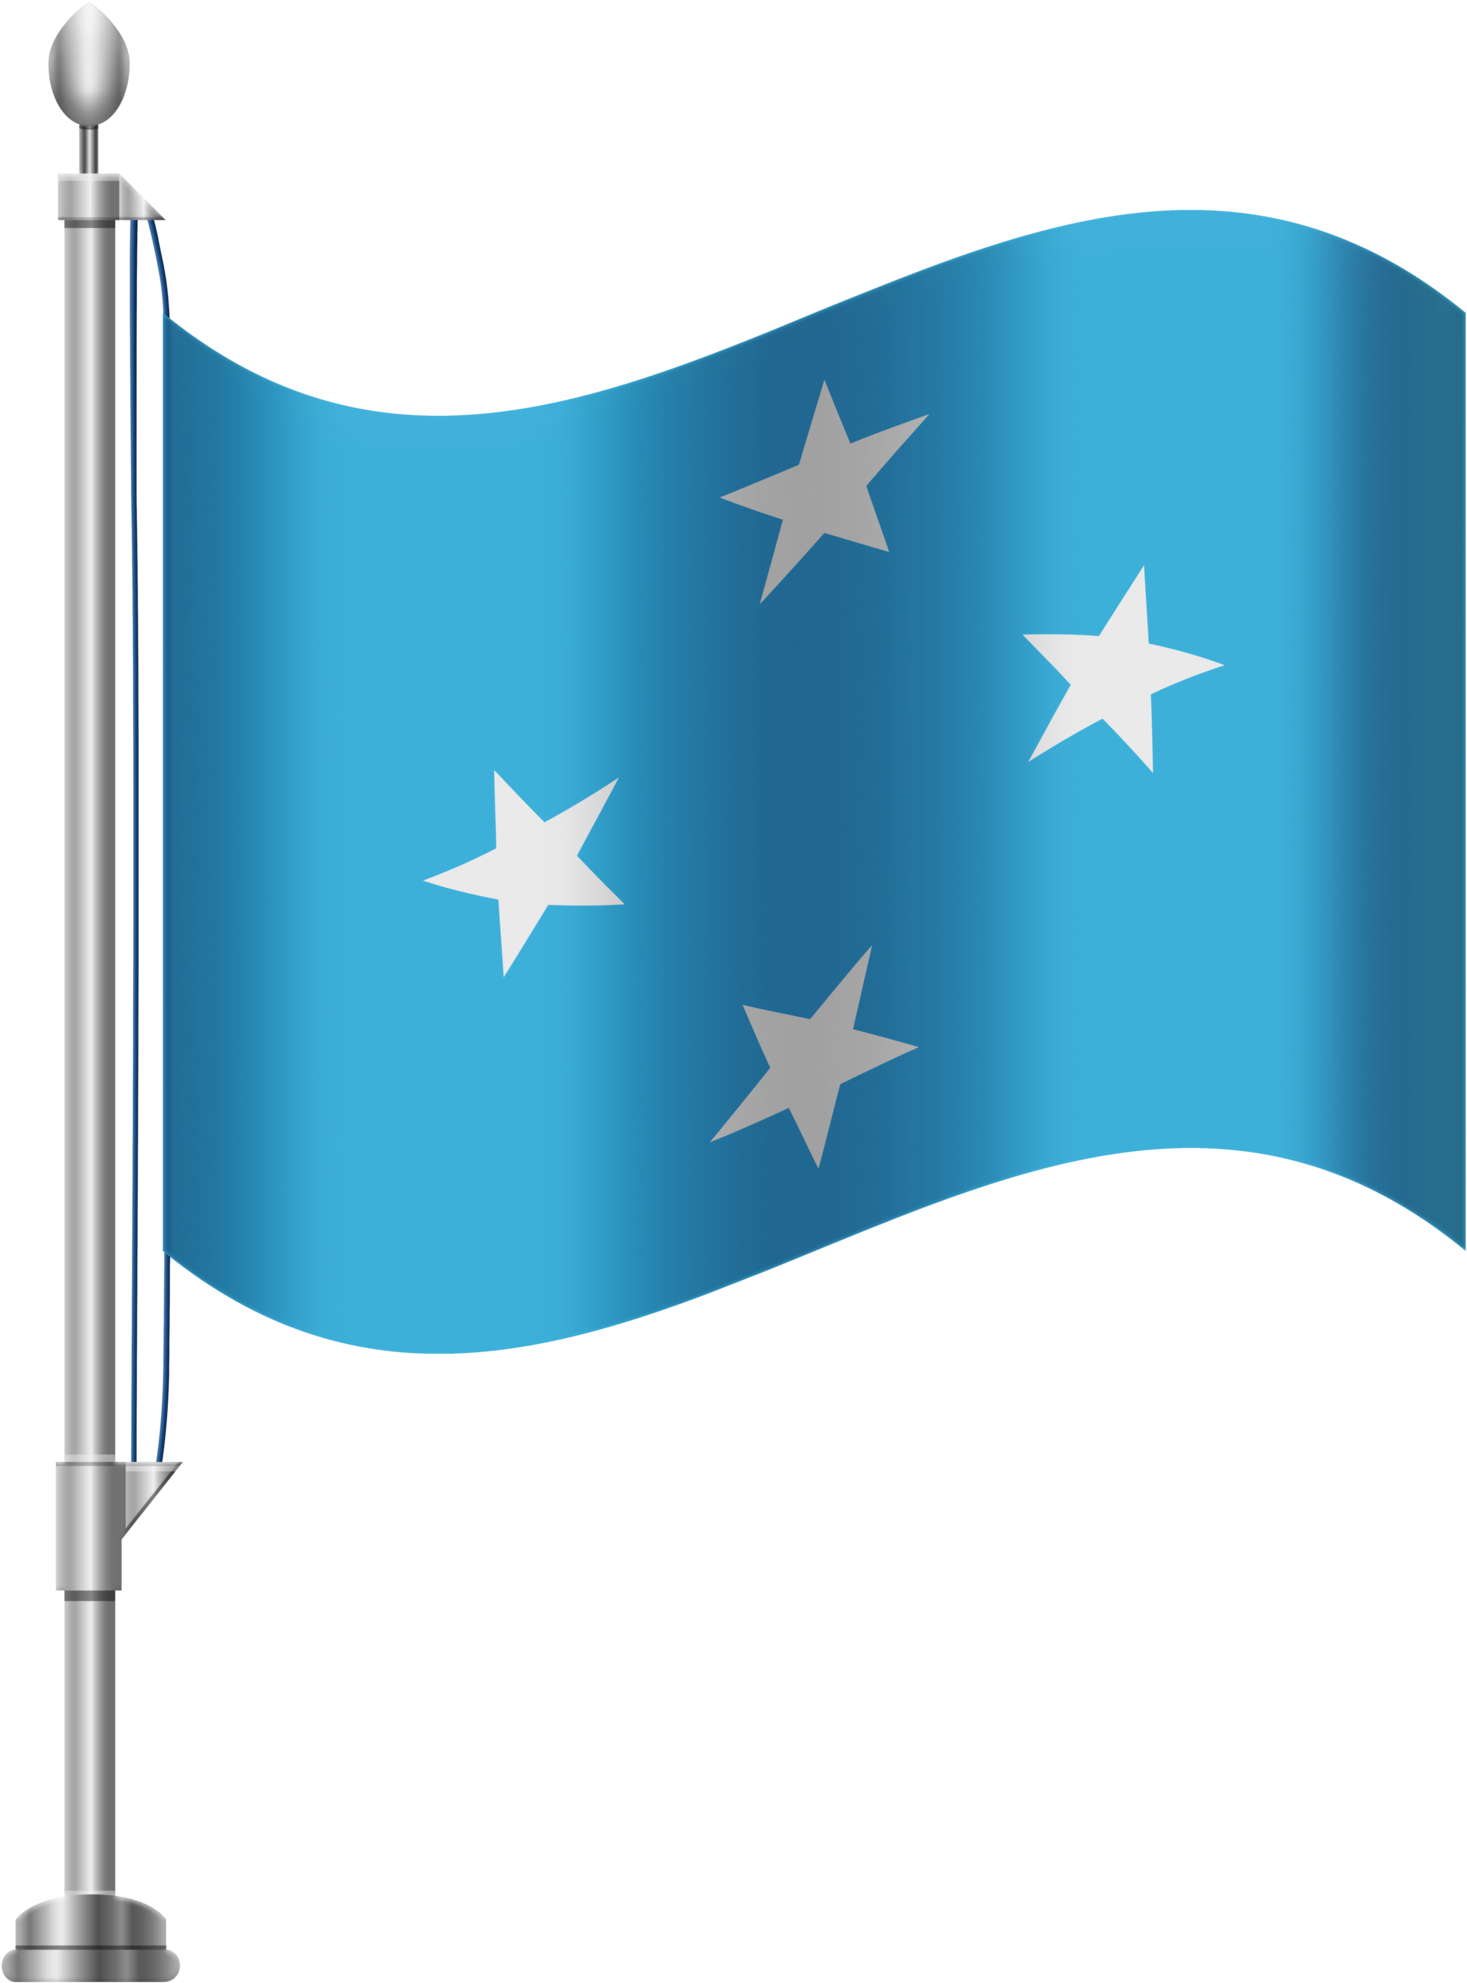 A Blue Flag With White Stars On A Pole